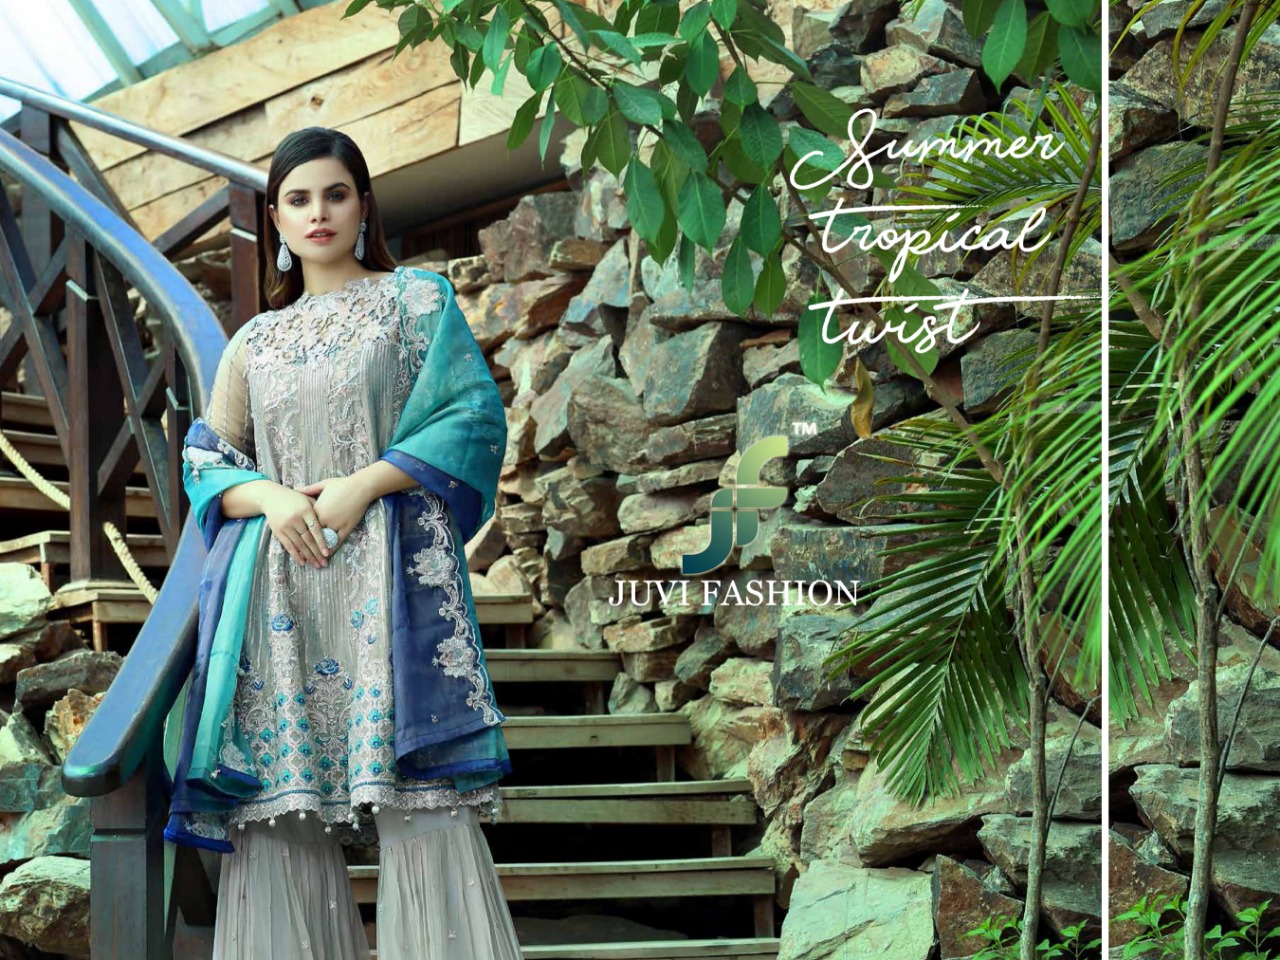 Juvi fashion eshaal vol 5 Beautiful collection of salwar kameez